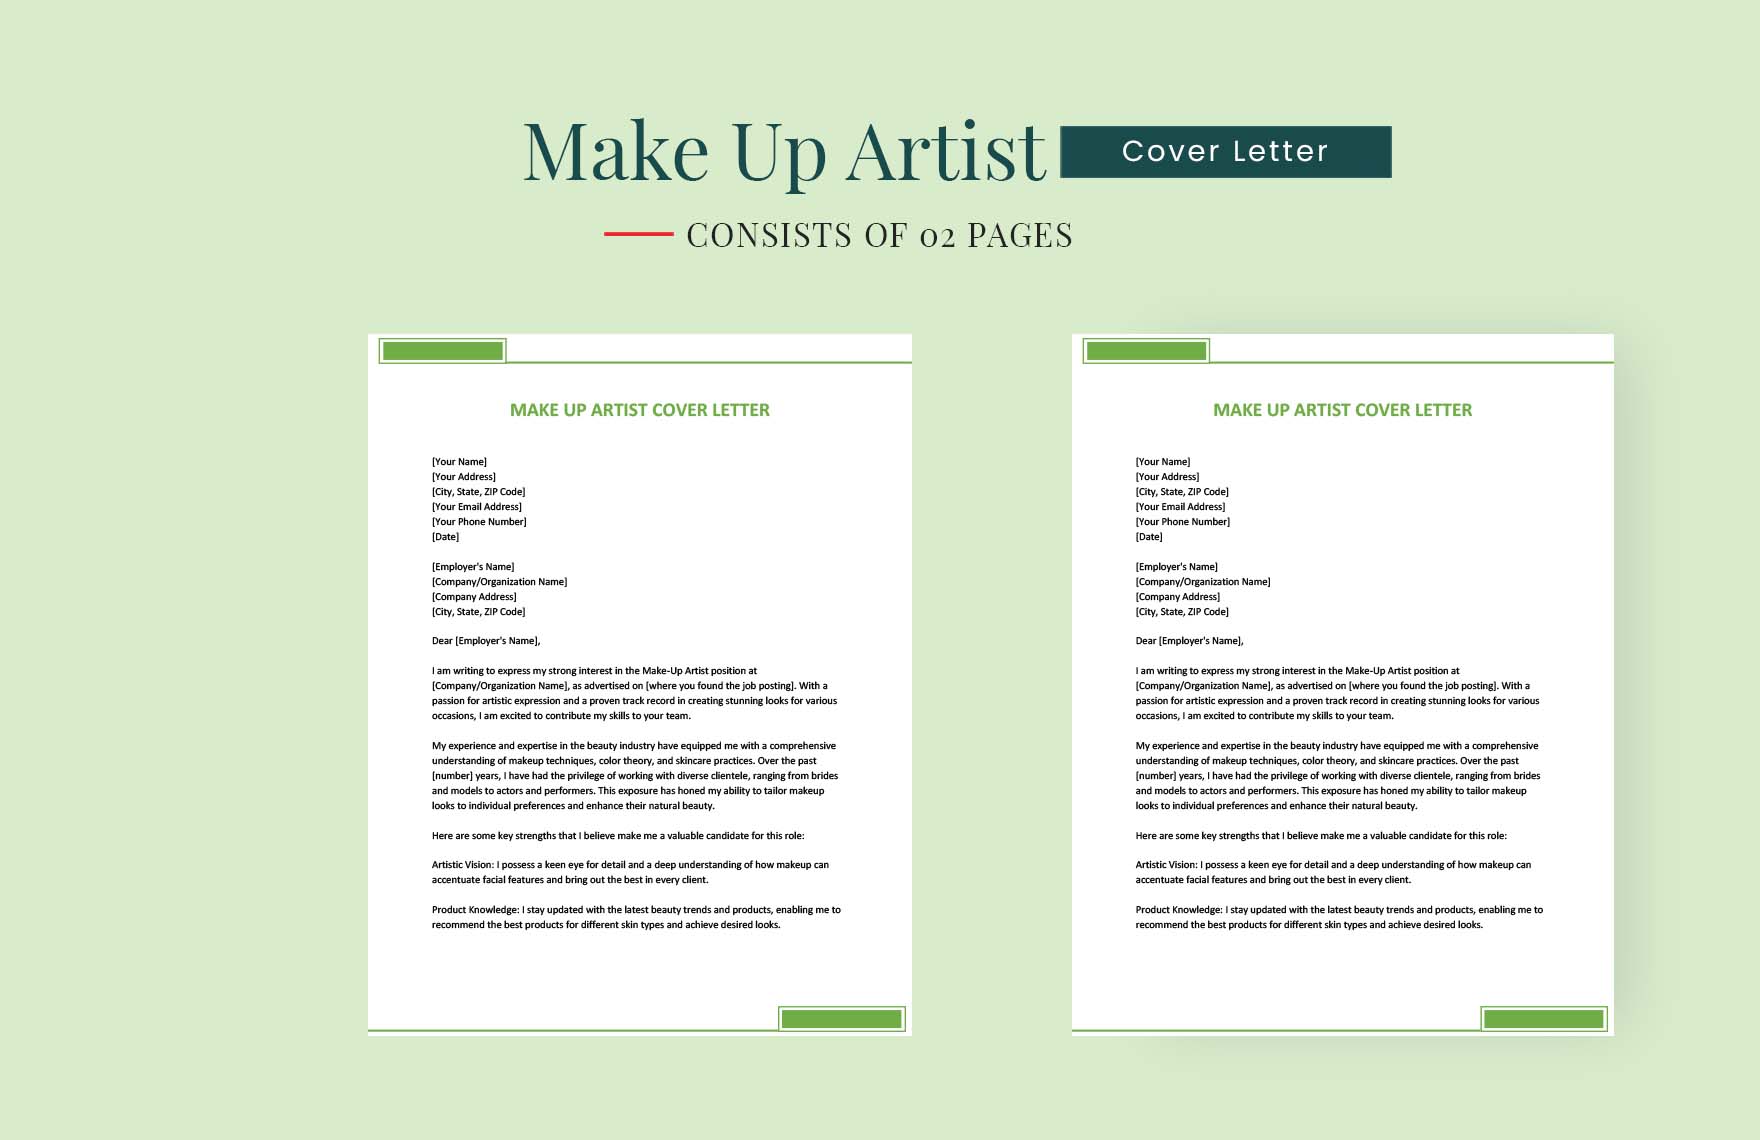 Make Up Artist Cover Letter in Word, Google Docs